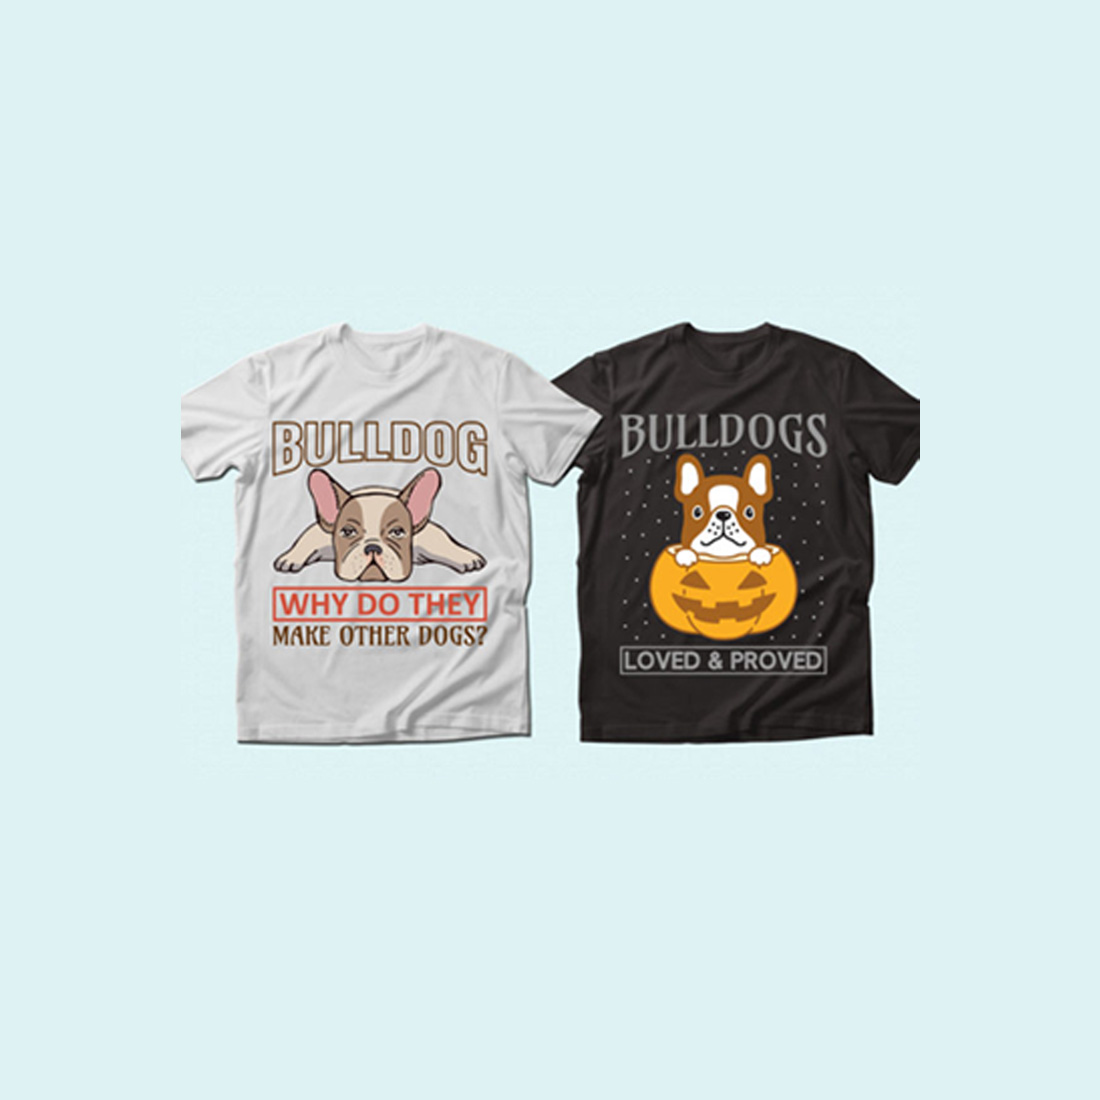 trendy 20 bulldog quotes t shirt designs 1 524